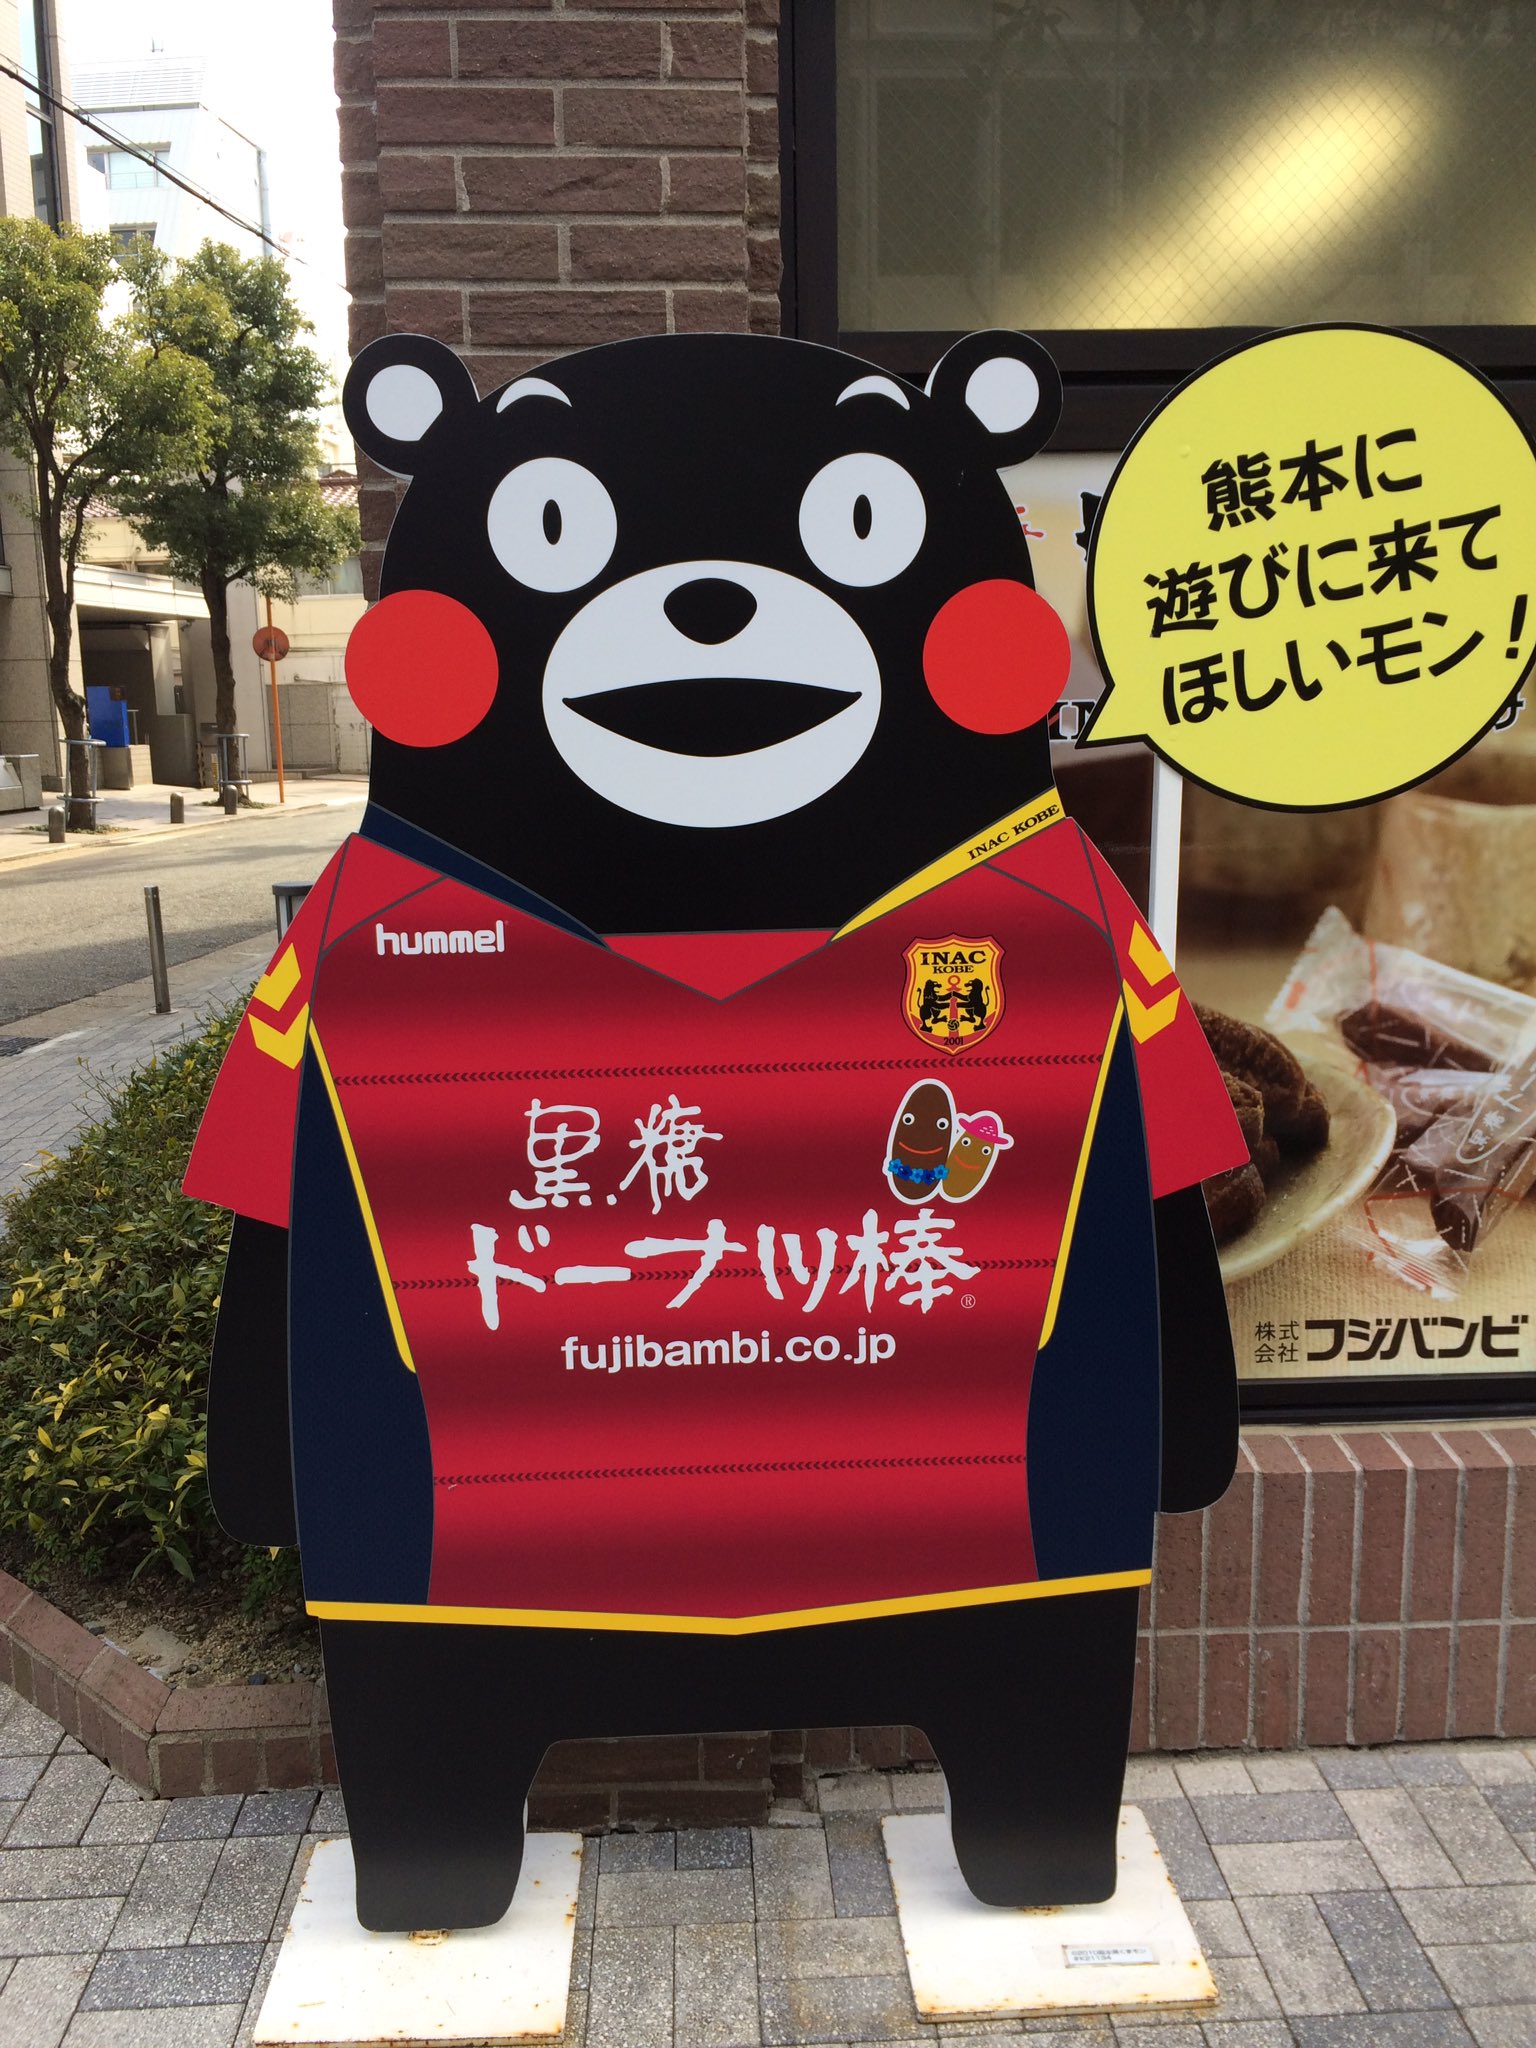 M Yoshi 神戸観光 南京町中華街出たら黒糖ドーナツ棒 憎きinac神戸のスポンサー を見つけてしまったので衝動買い ちなみにお菓子の方は美味しかったです 悔しいけど T Co 1j8v60wp Twitter